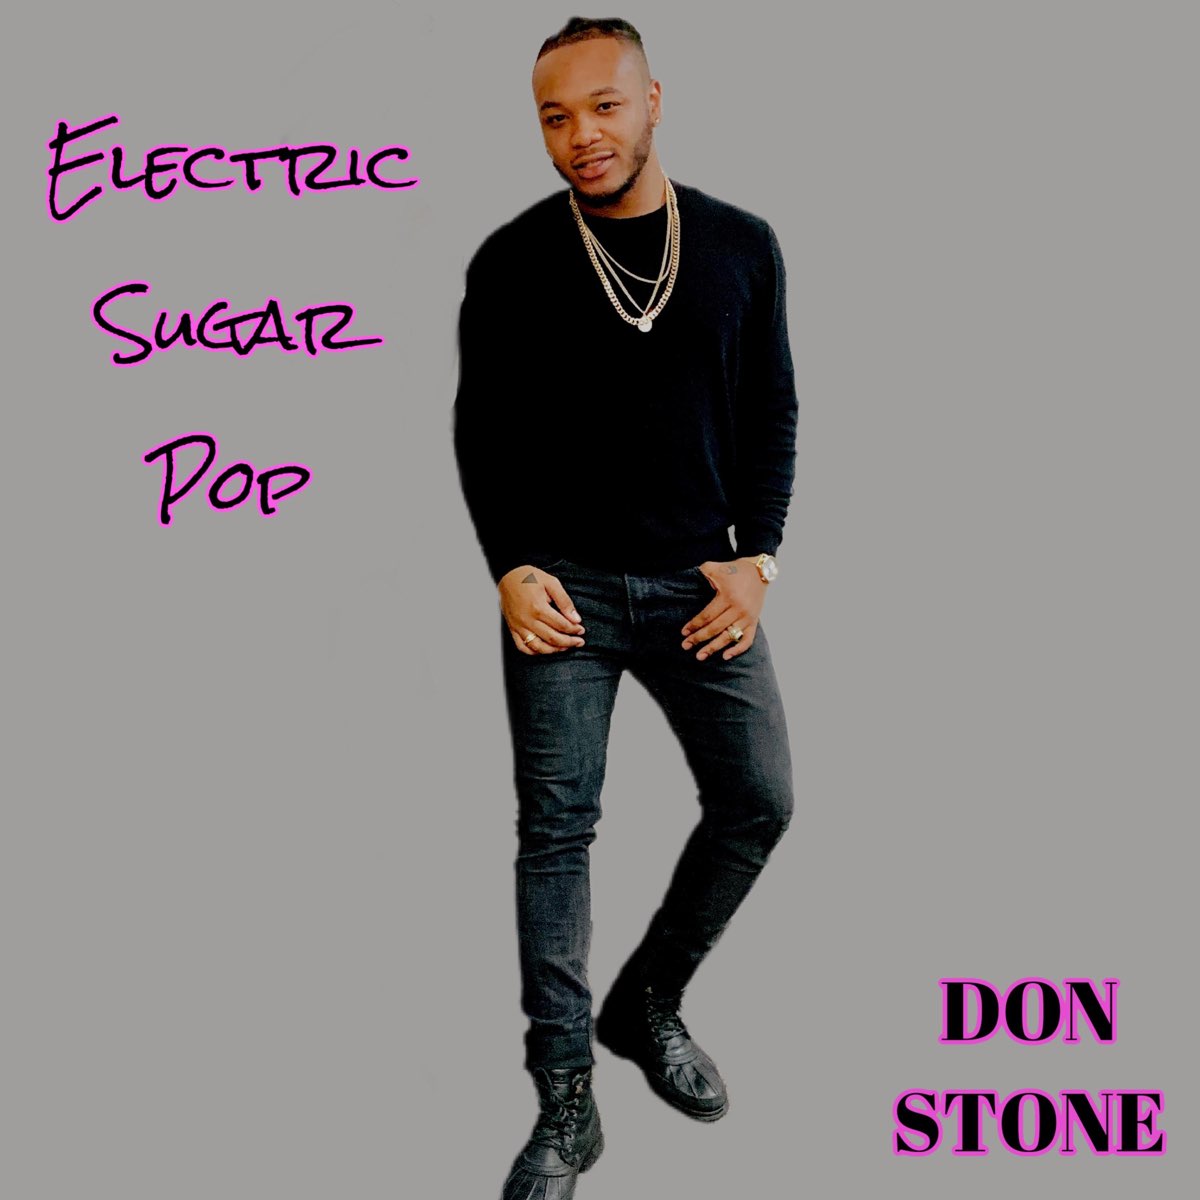 Don stone